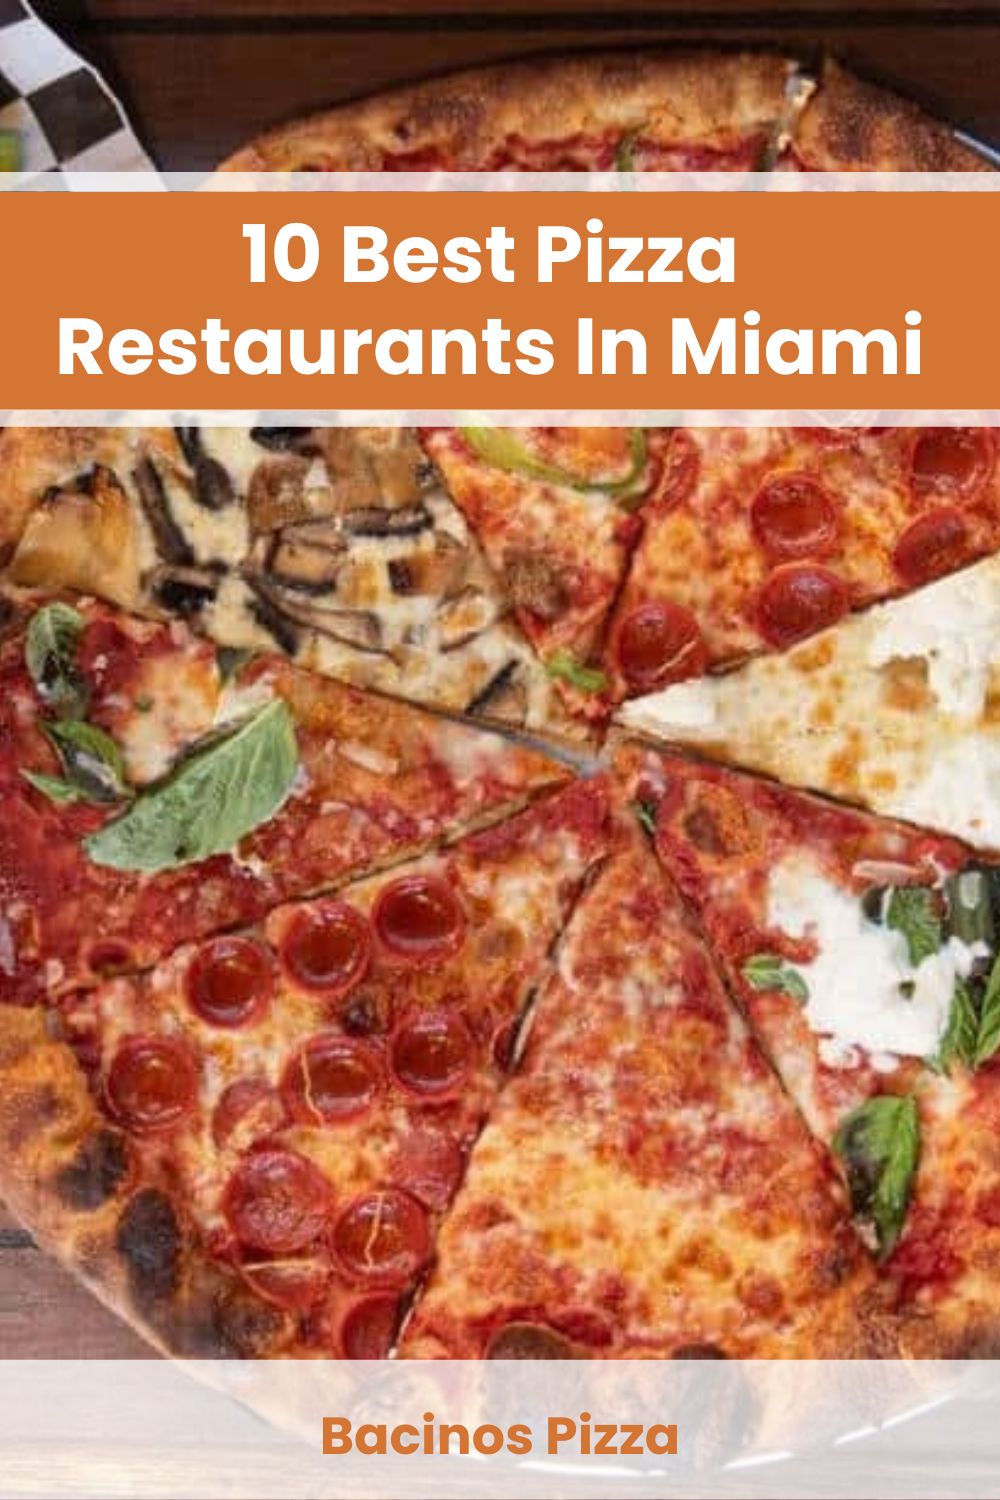 Best Pizza Restaurants in Miami